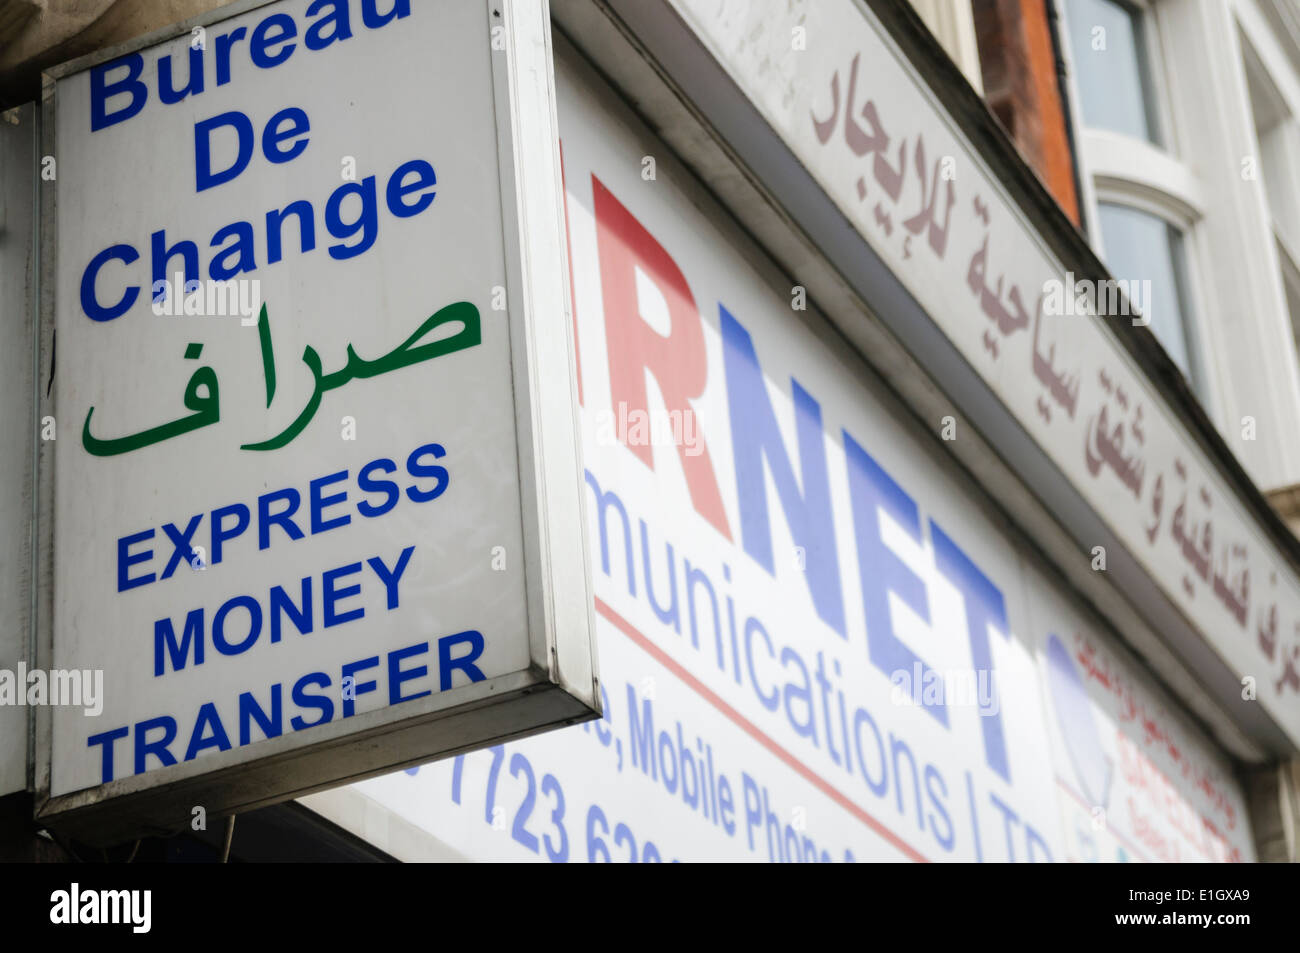 Bureau de Change, Express money transfer, in arabic Stock Photo